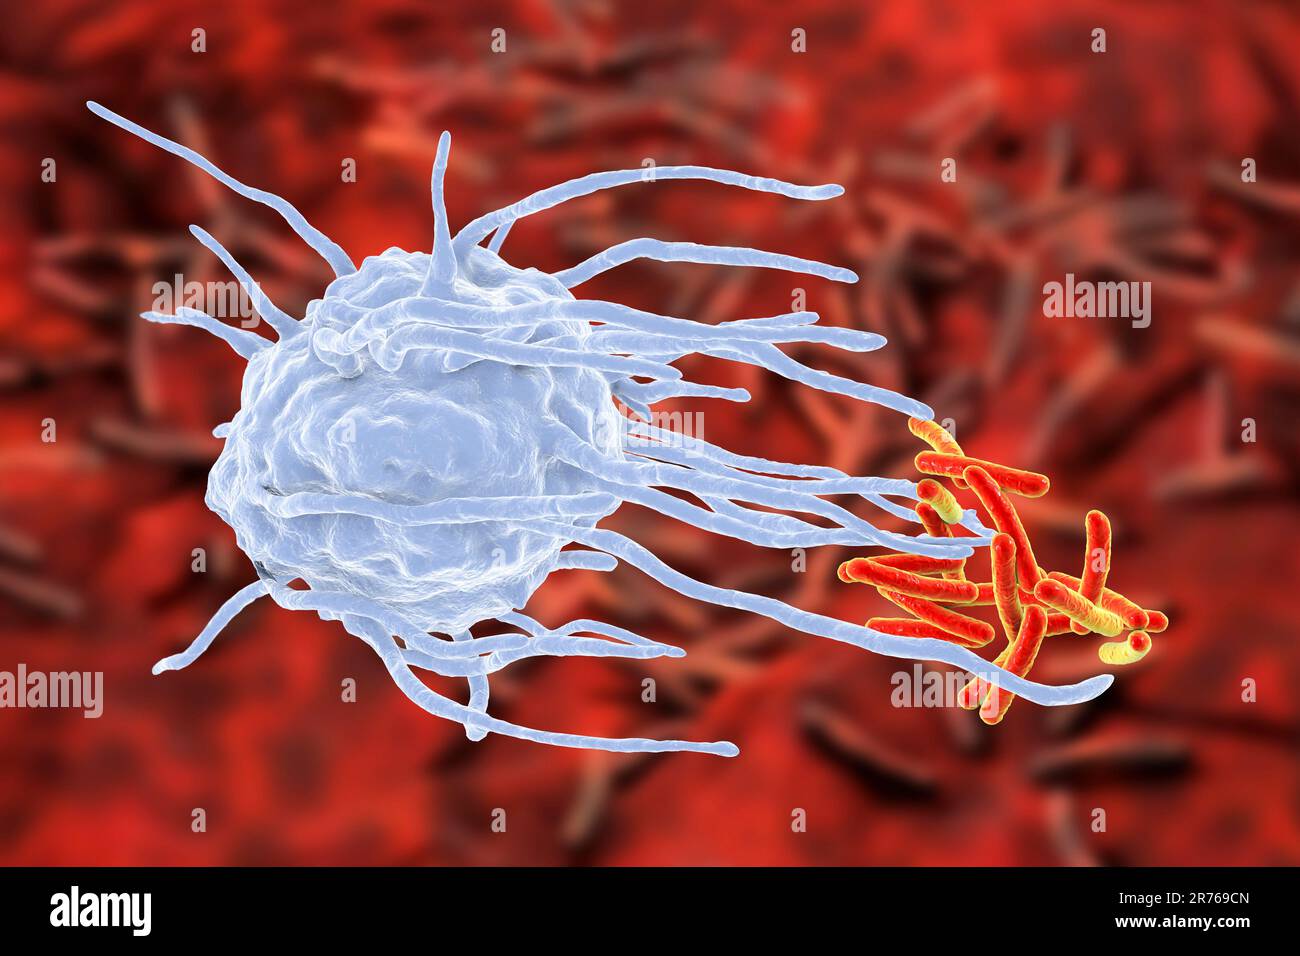 Macrophage engulfing TB bacteria. Computer illustration of a macrophage ...